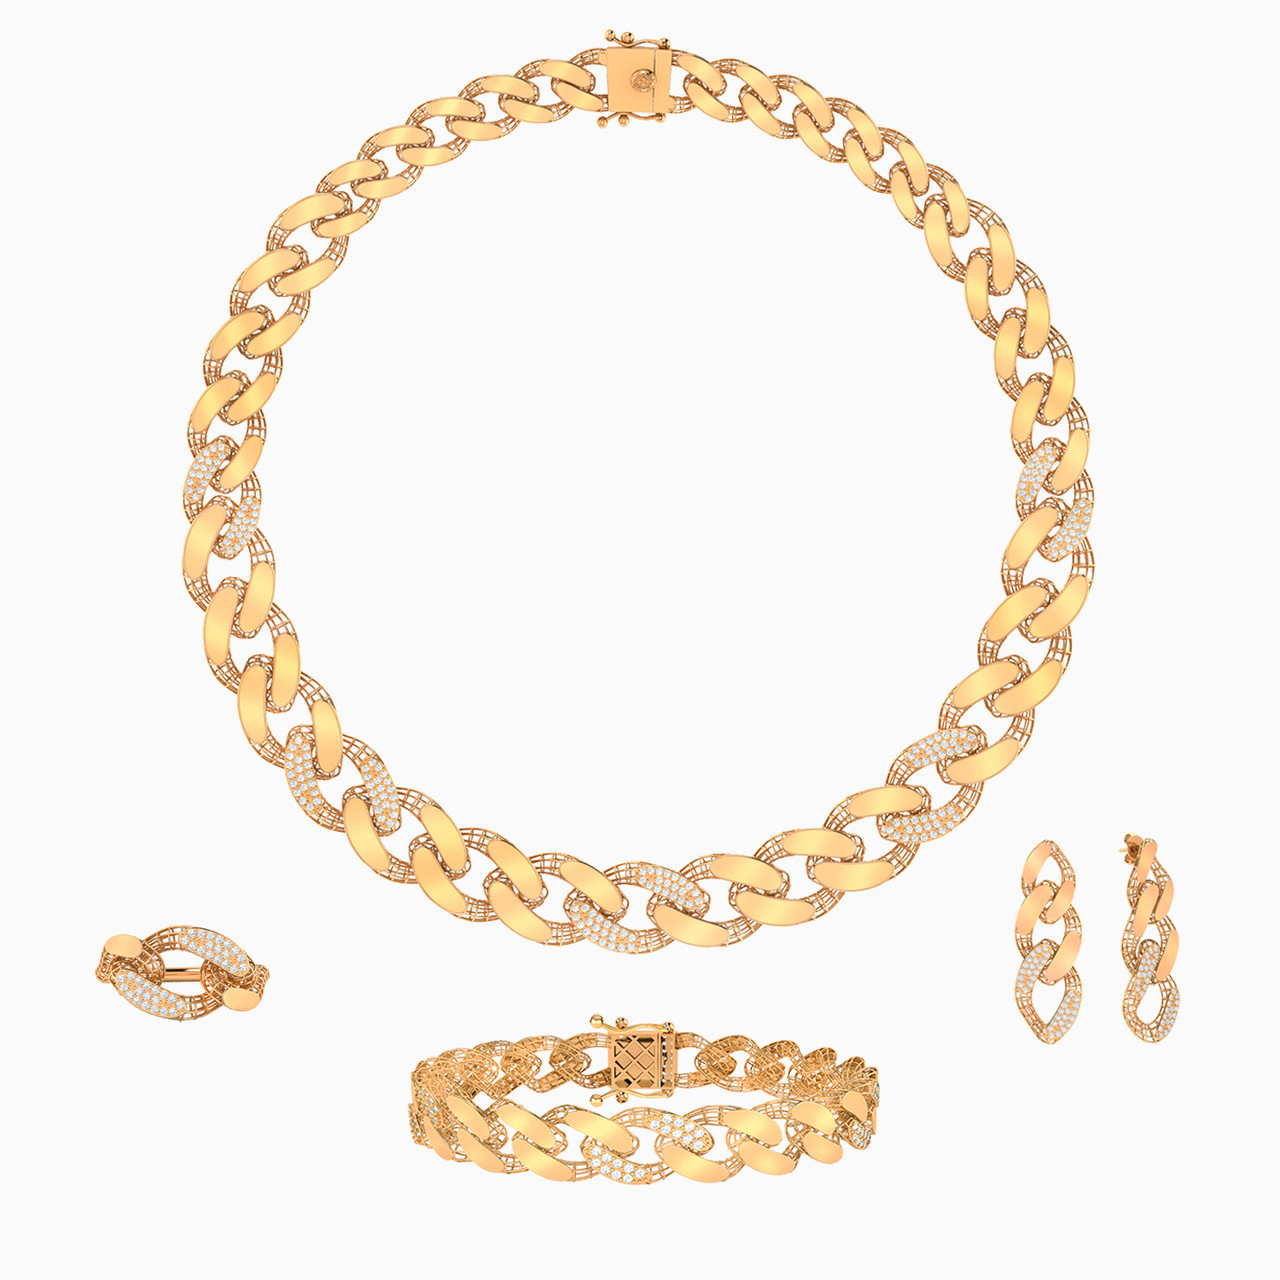 21K Gold Cubic Zirconia Jewelry Set -4 Pieces